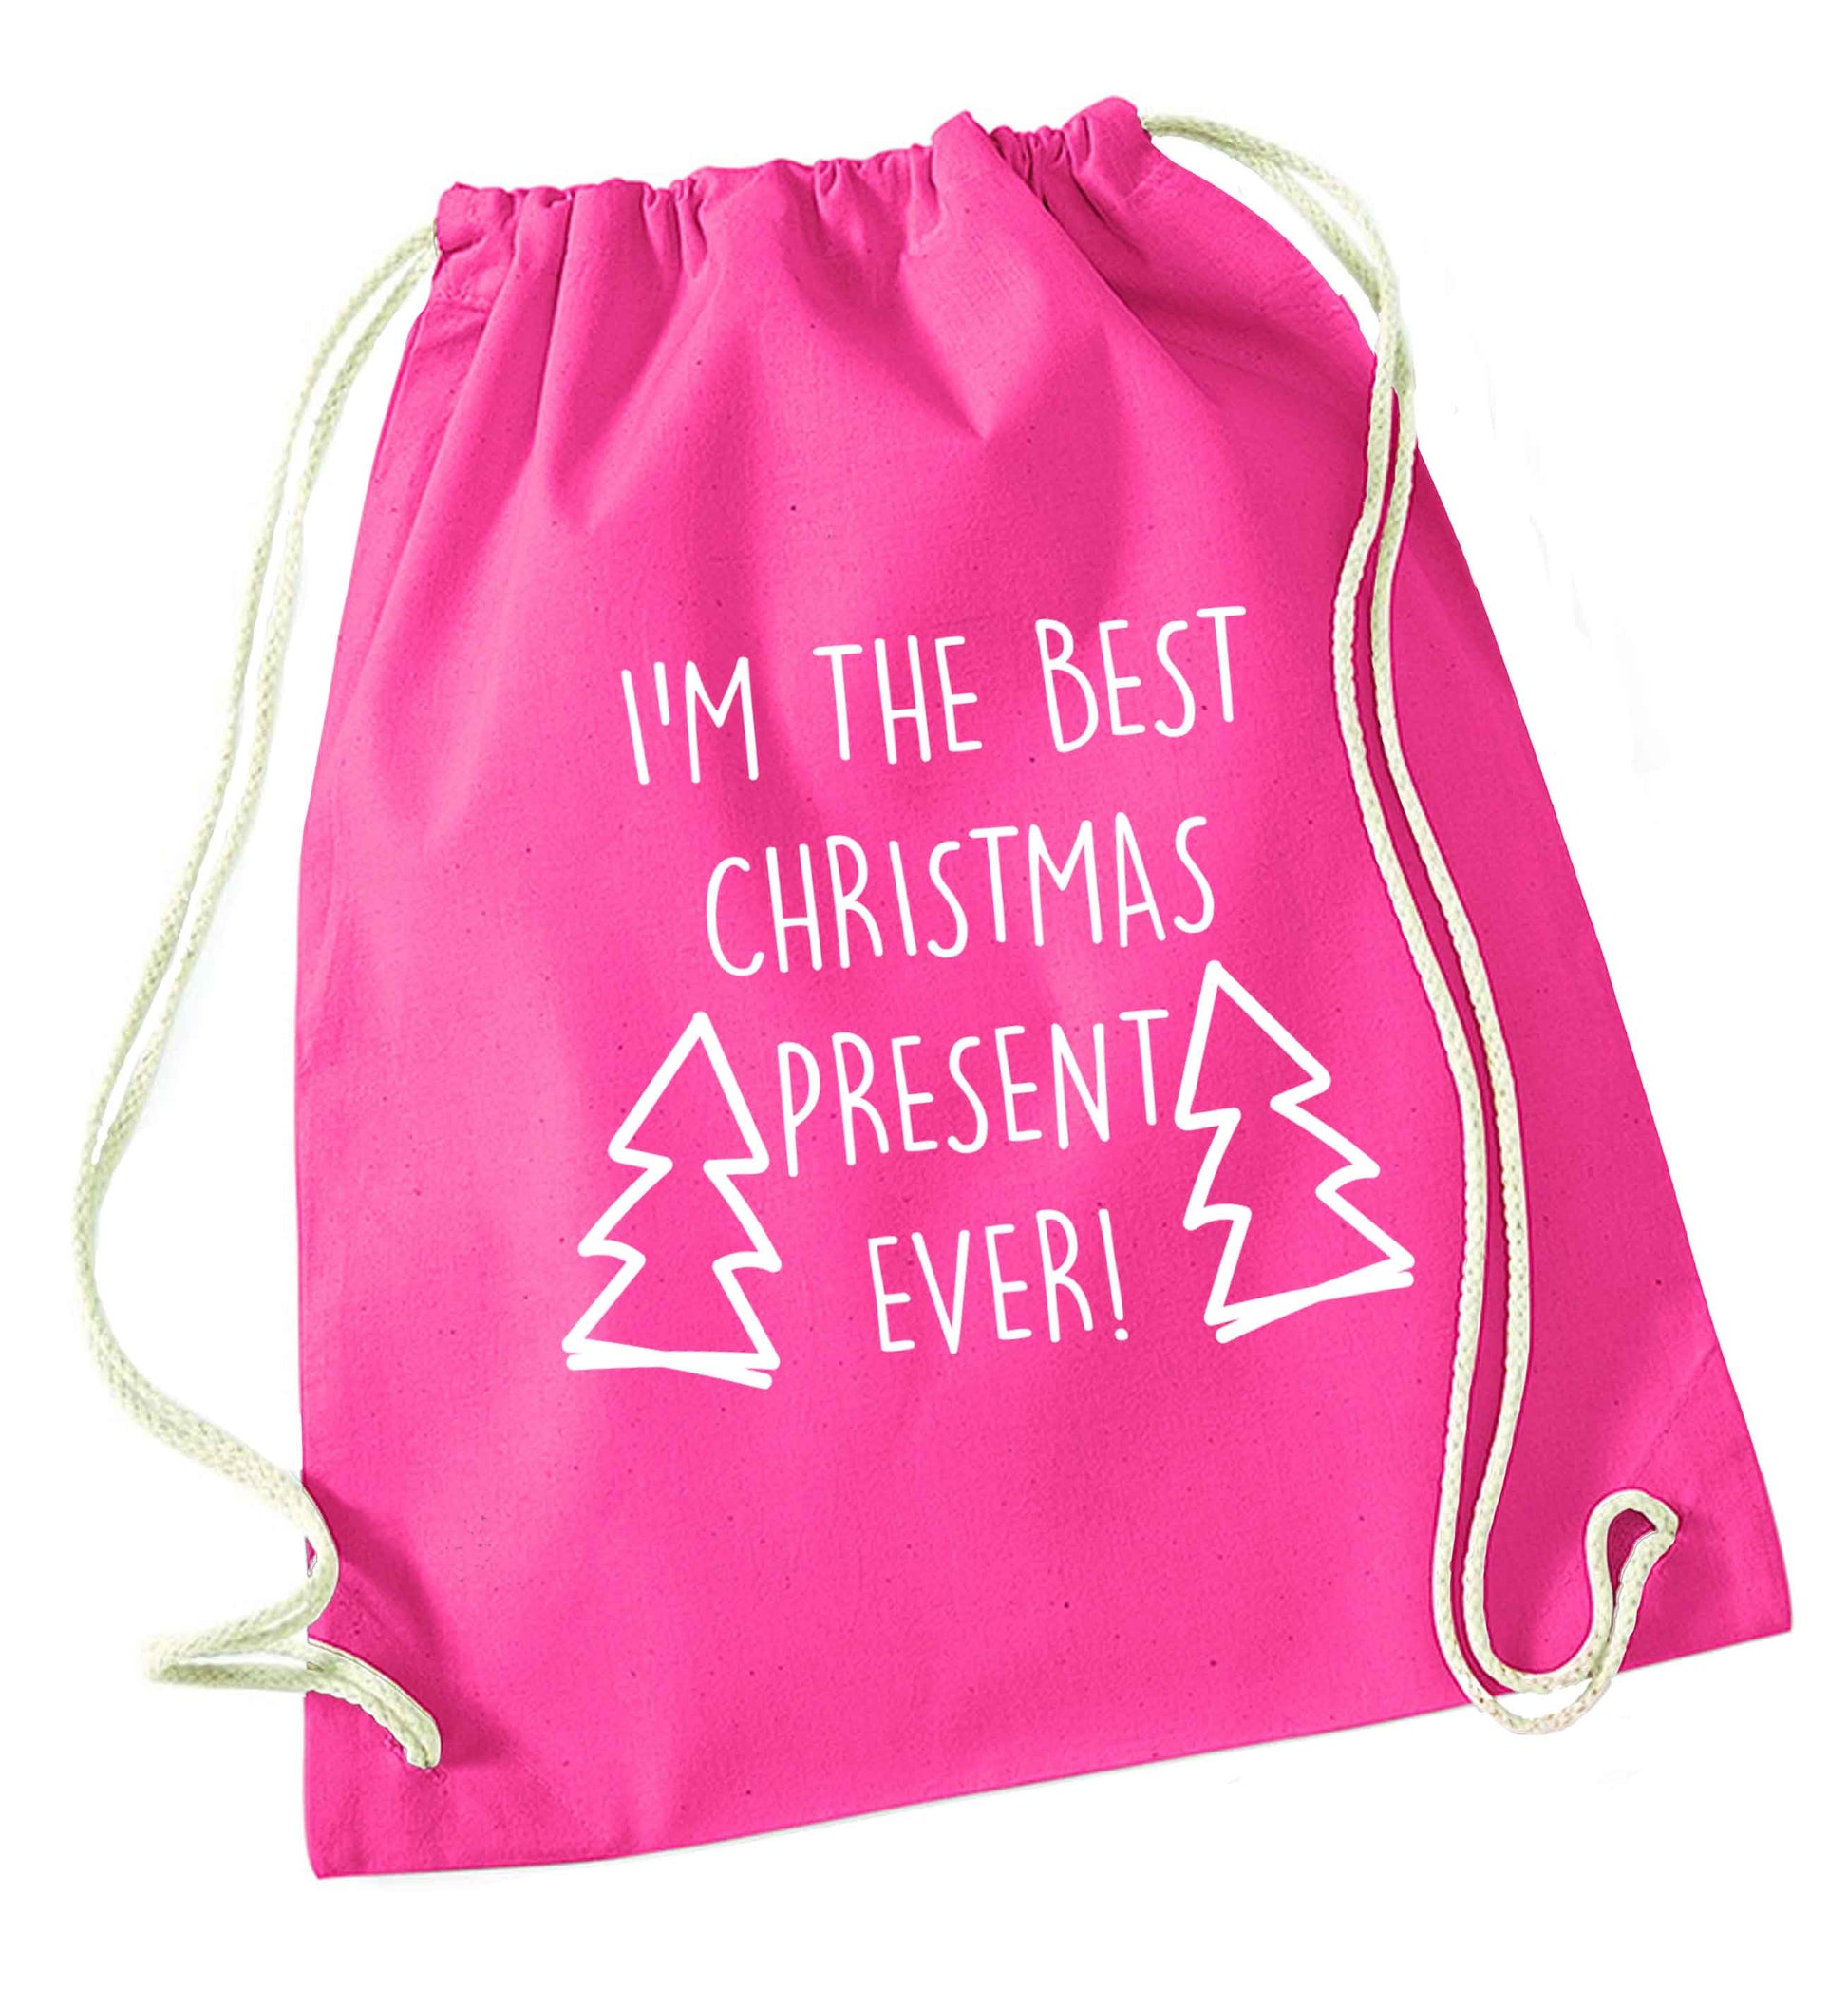 I'm the best Christmas present ever pink drawstring bag